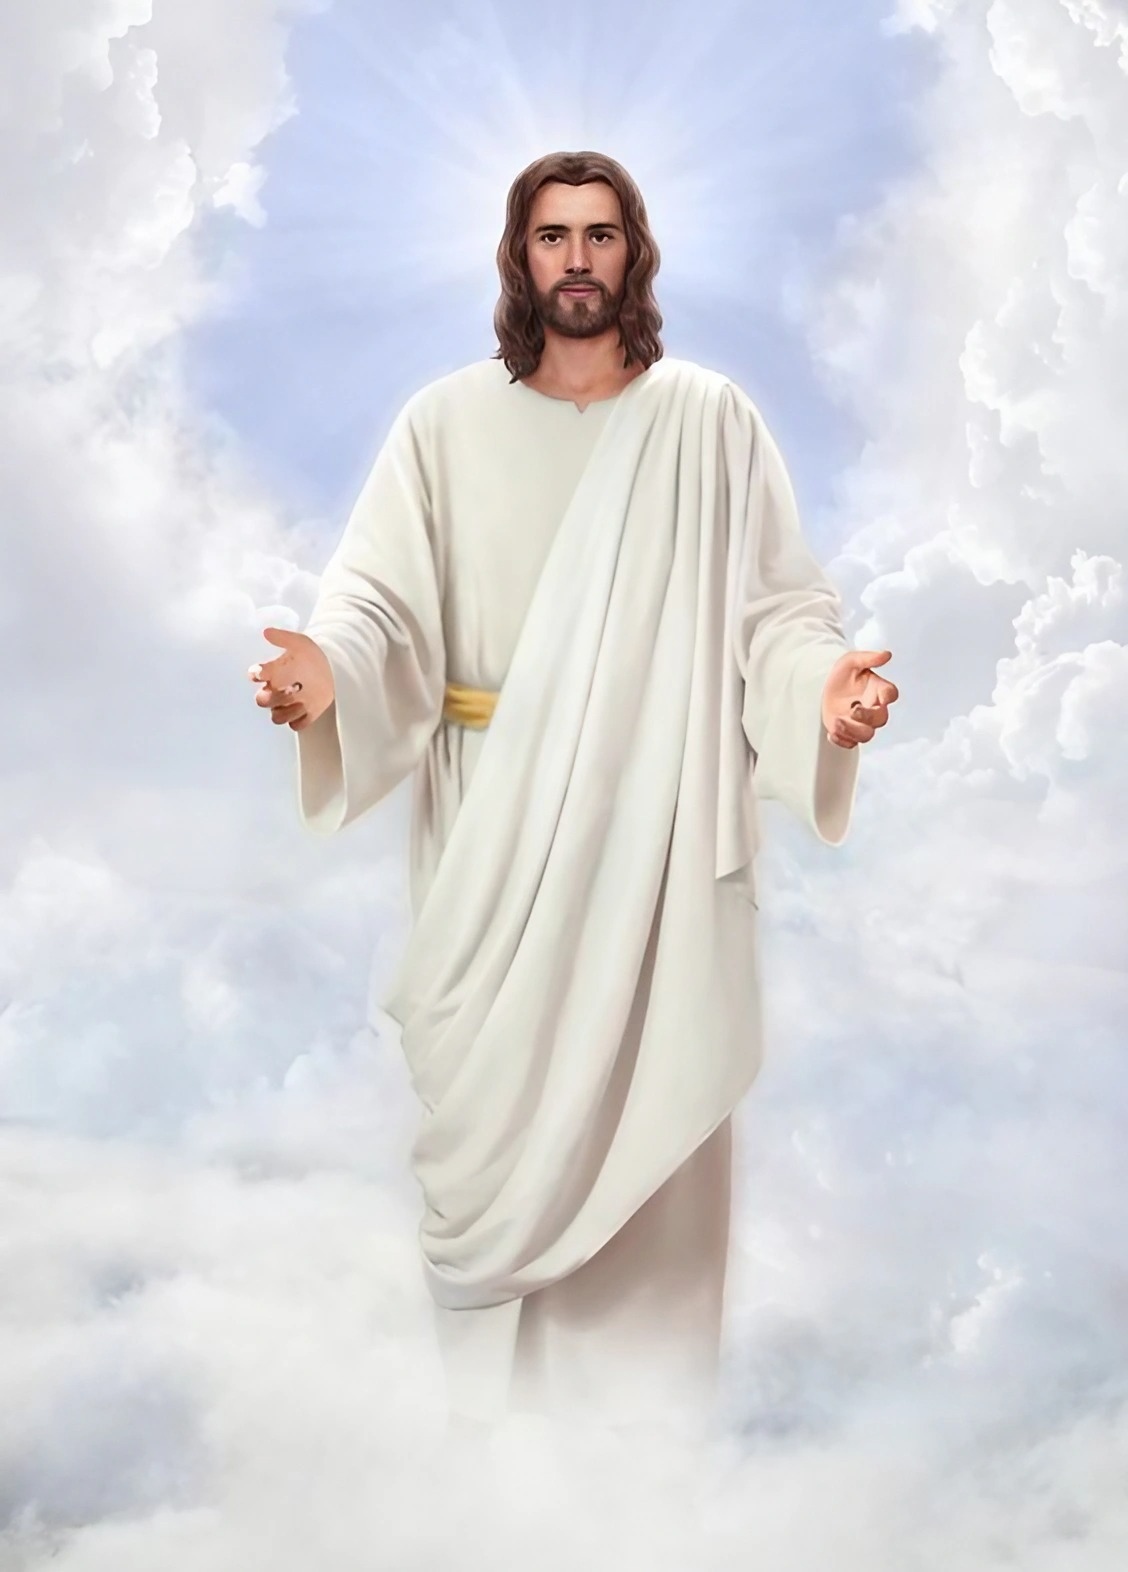 Yeshu Masih - Jesus Standing On Clouds